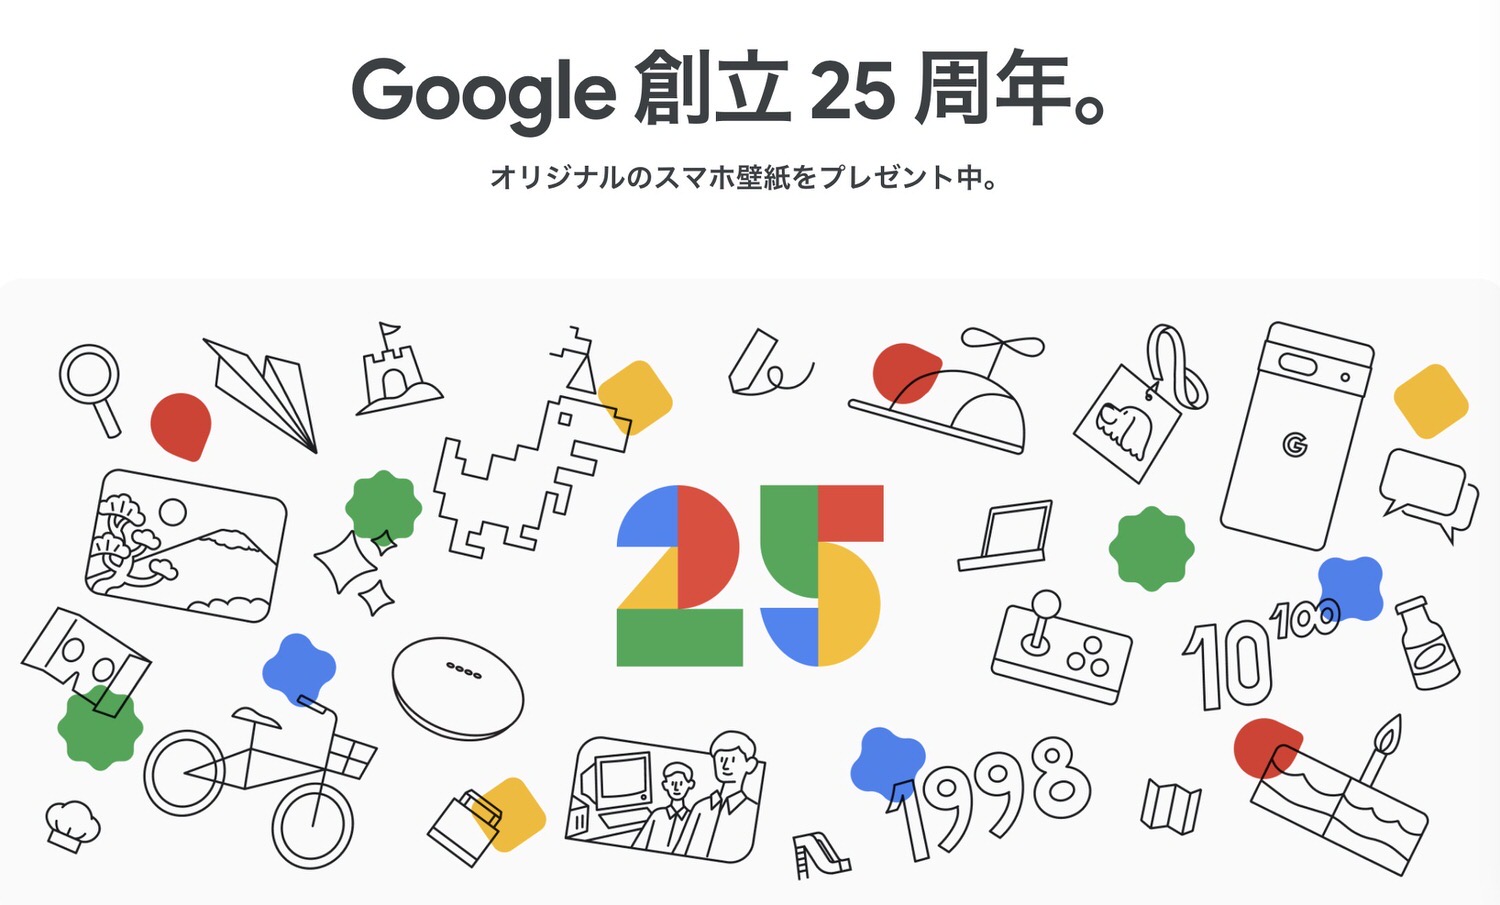 Google 25th